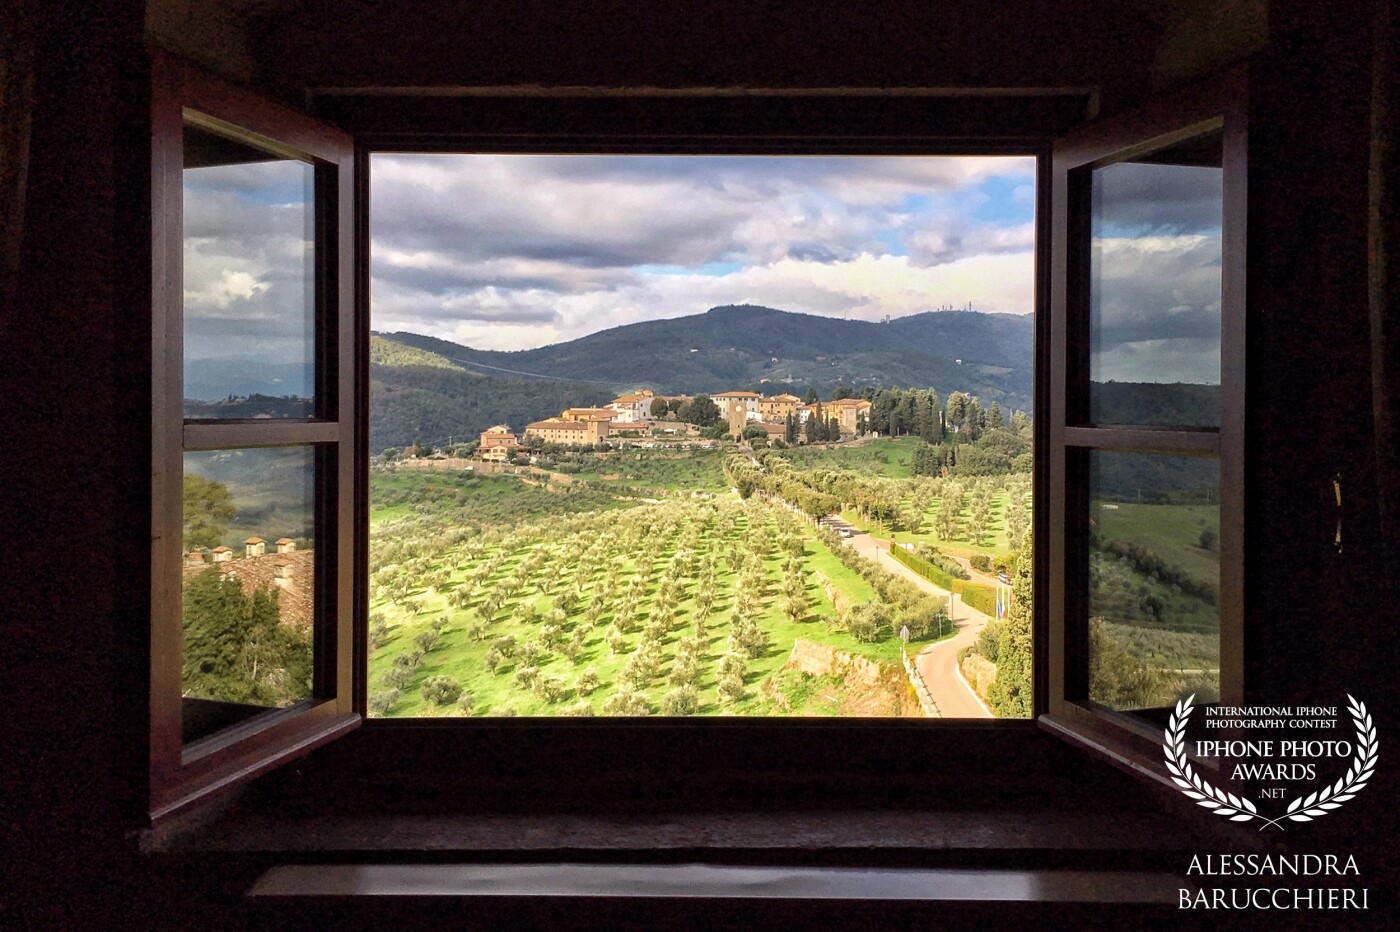 The view from one of the windows of the Villa Medicea La Ferdinanda, known as the "Villa of one hundred chimneys", in Artimino, Prato, Italy.